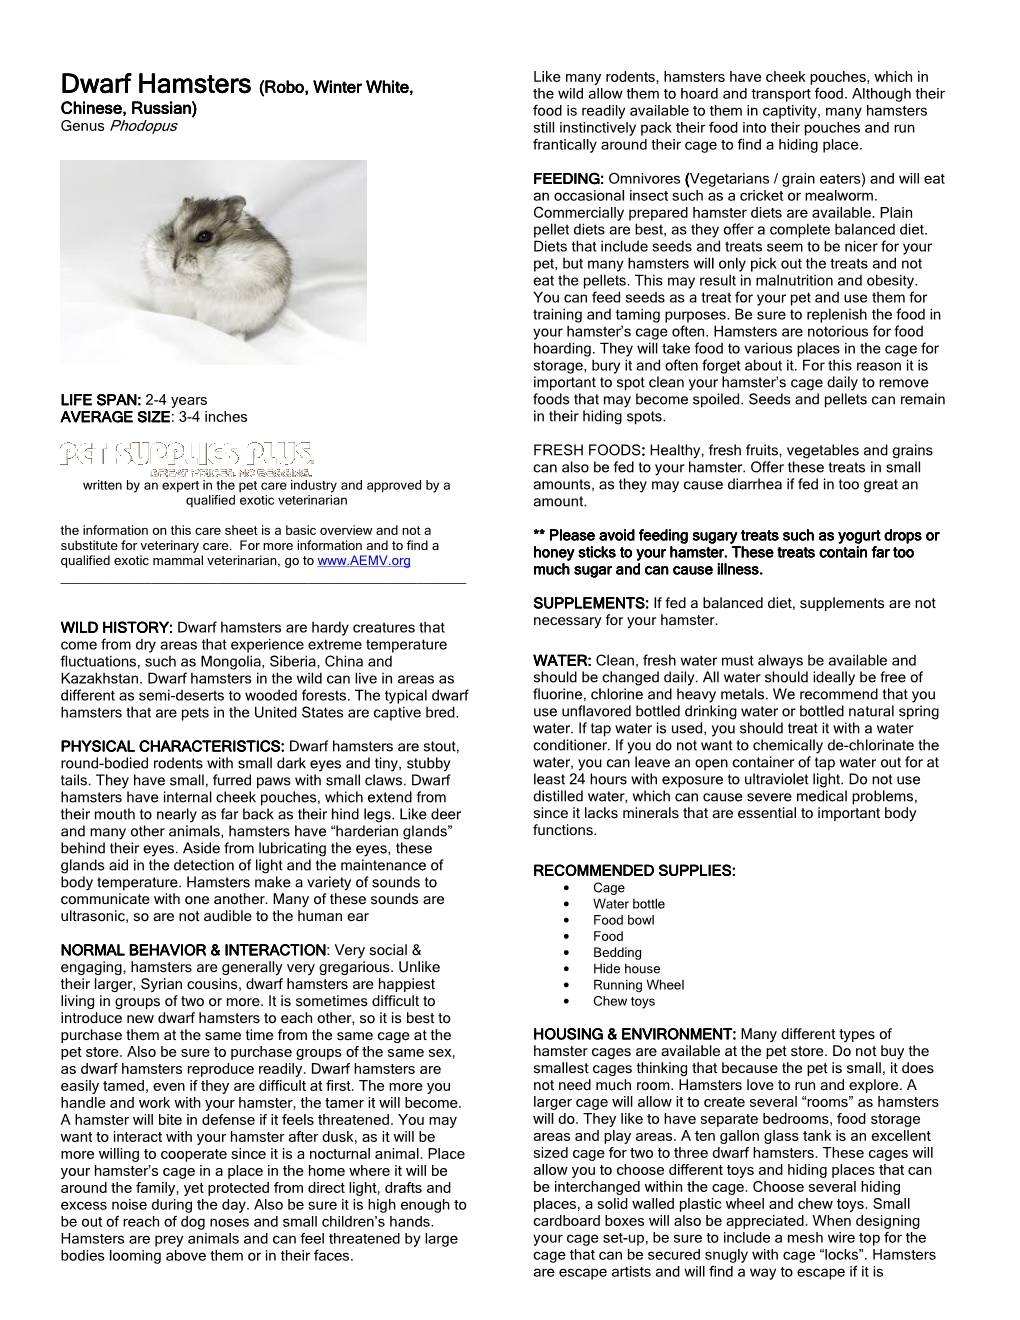 Dwarf Hamster Care Sheet